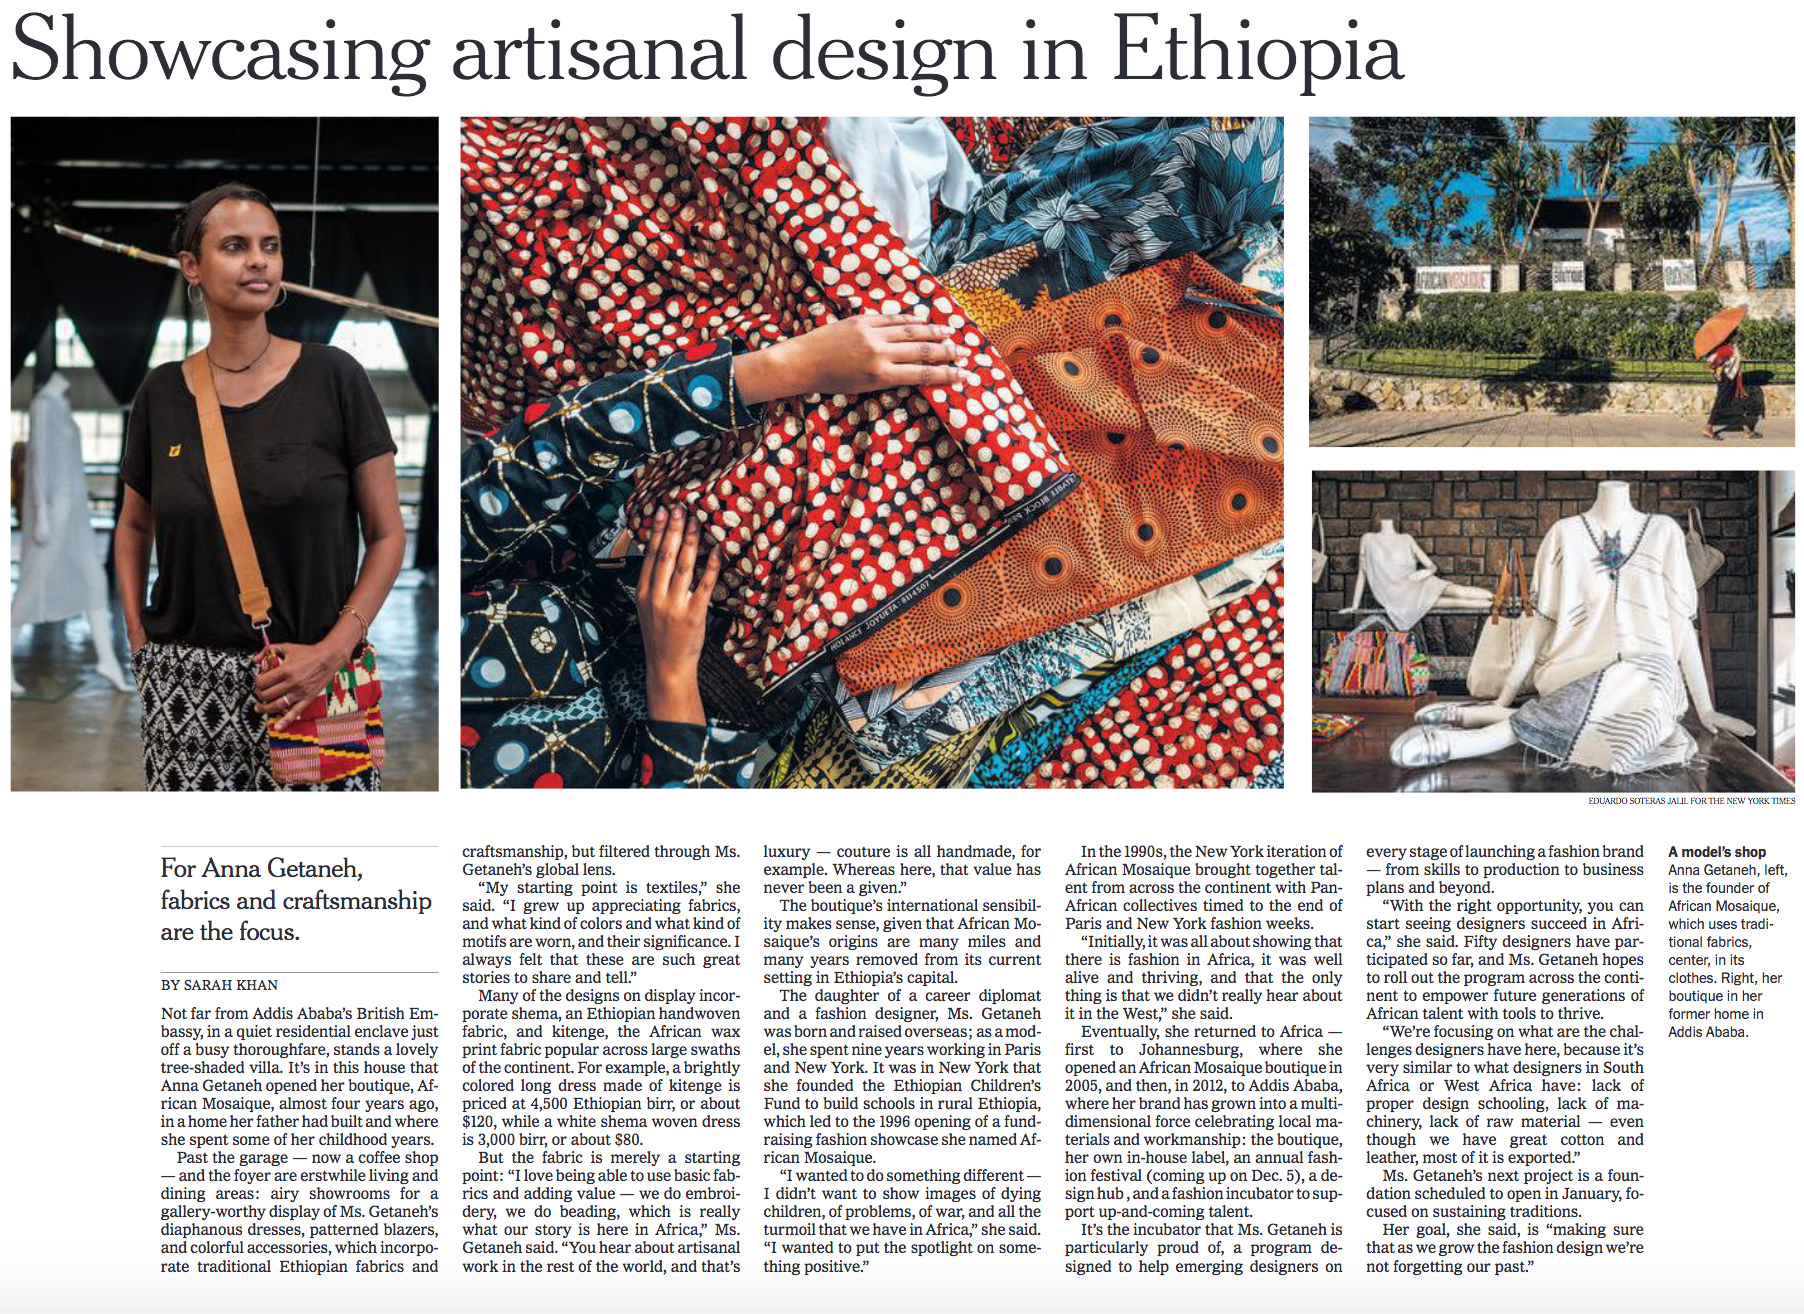 New York Times: An Ethiopian Boutique Showcasing Artisanal Design